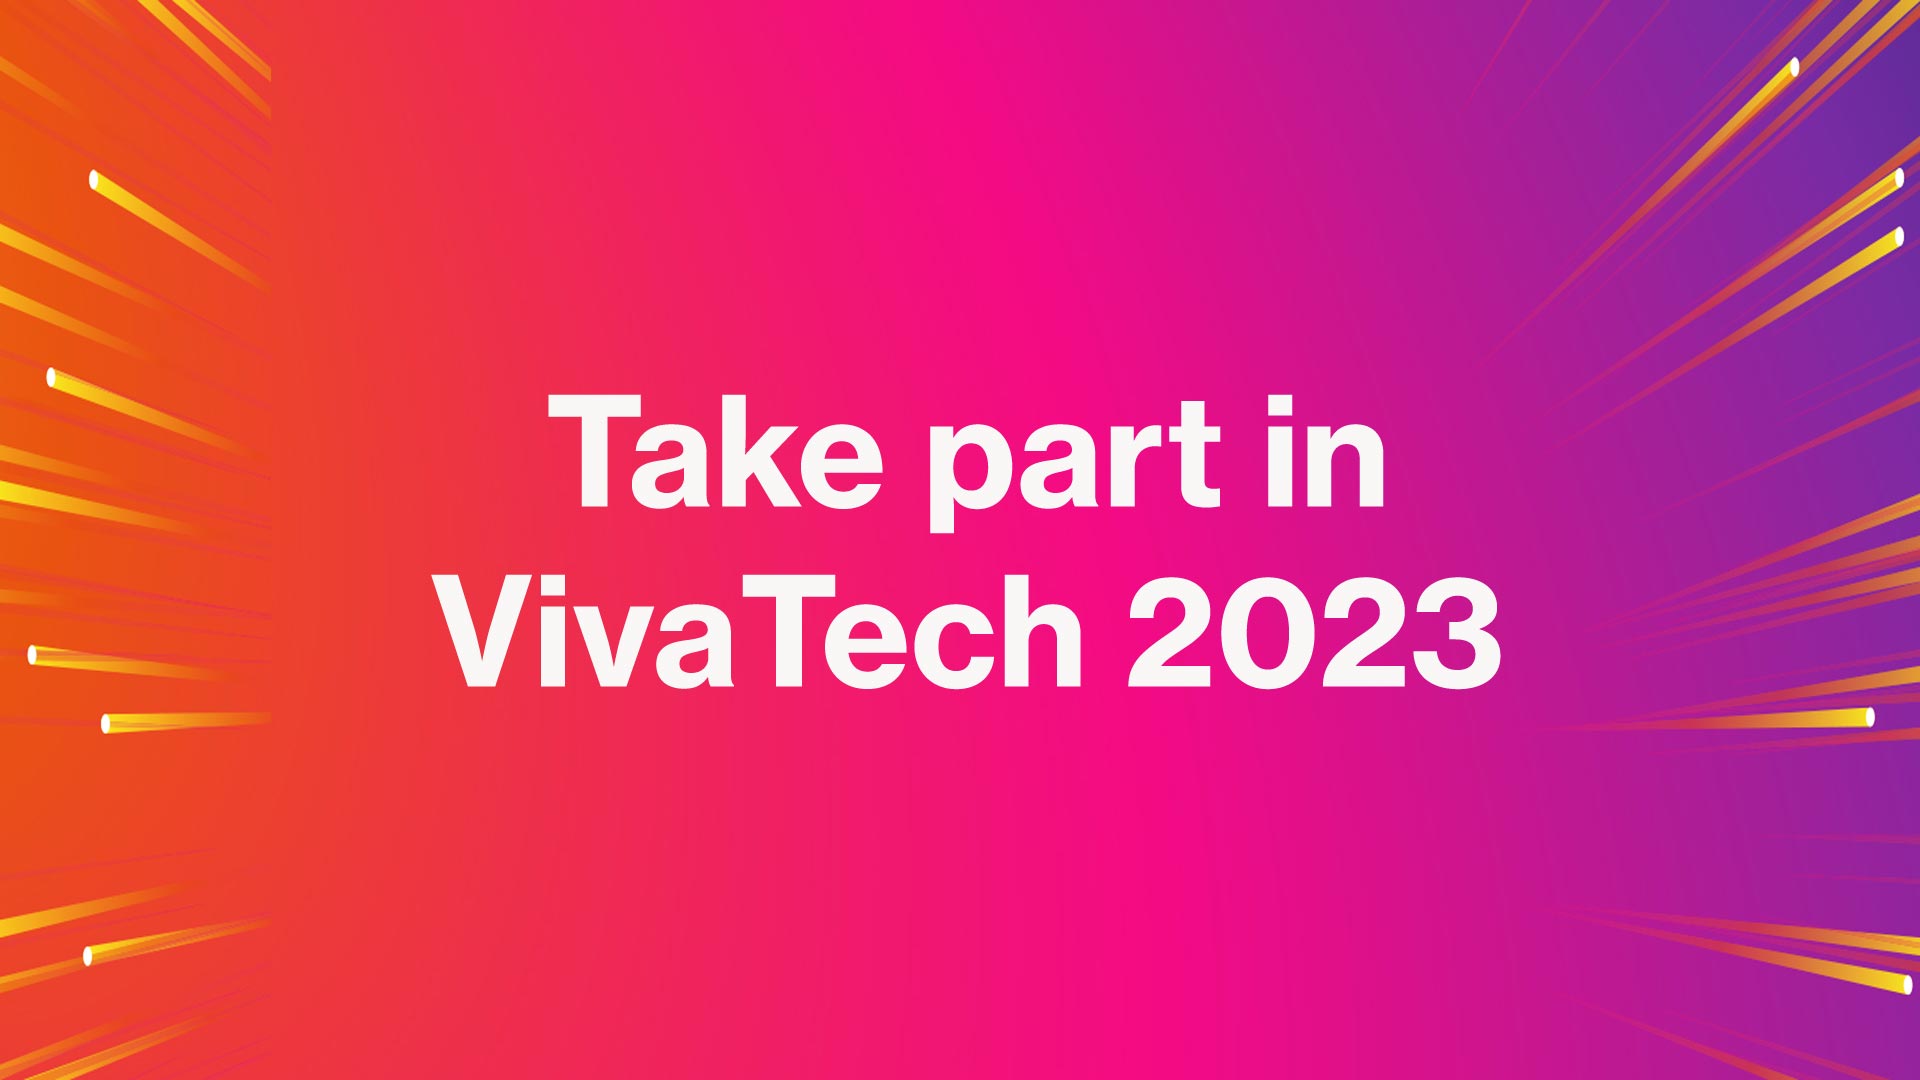 Take part in VivaTech 2023